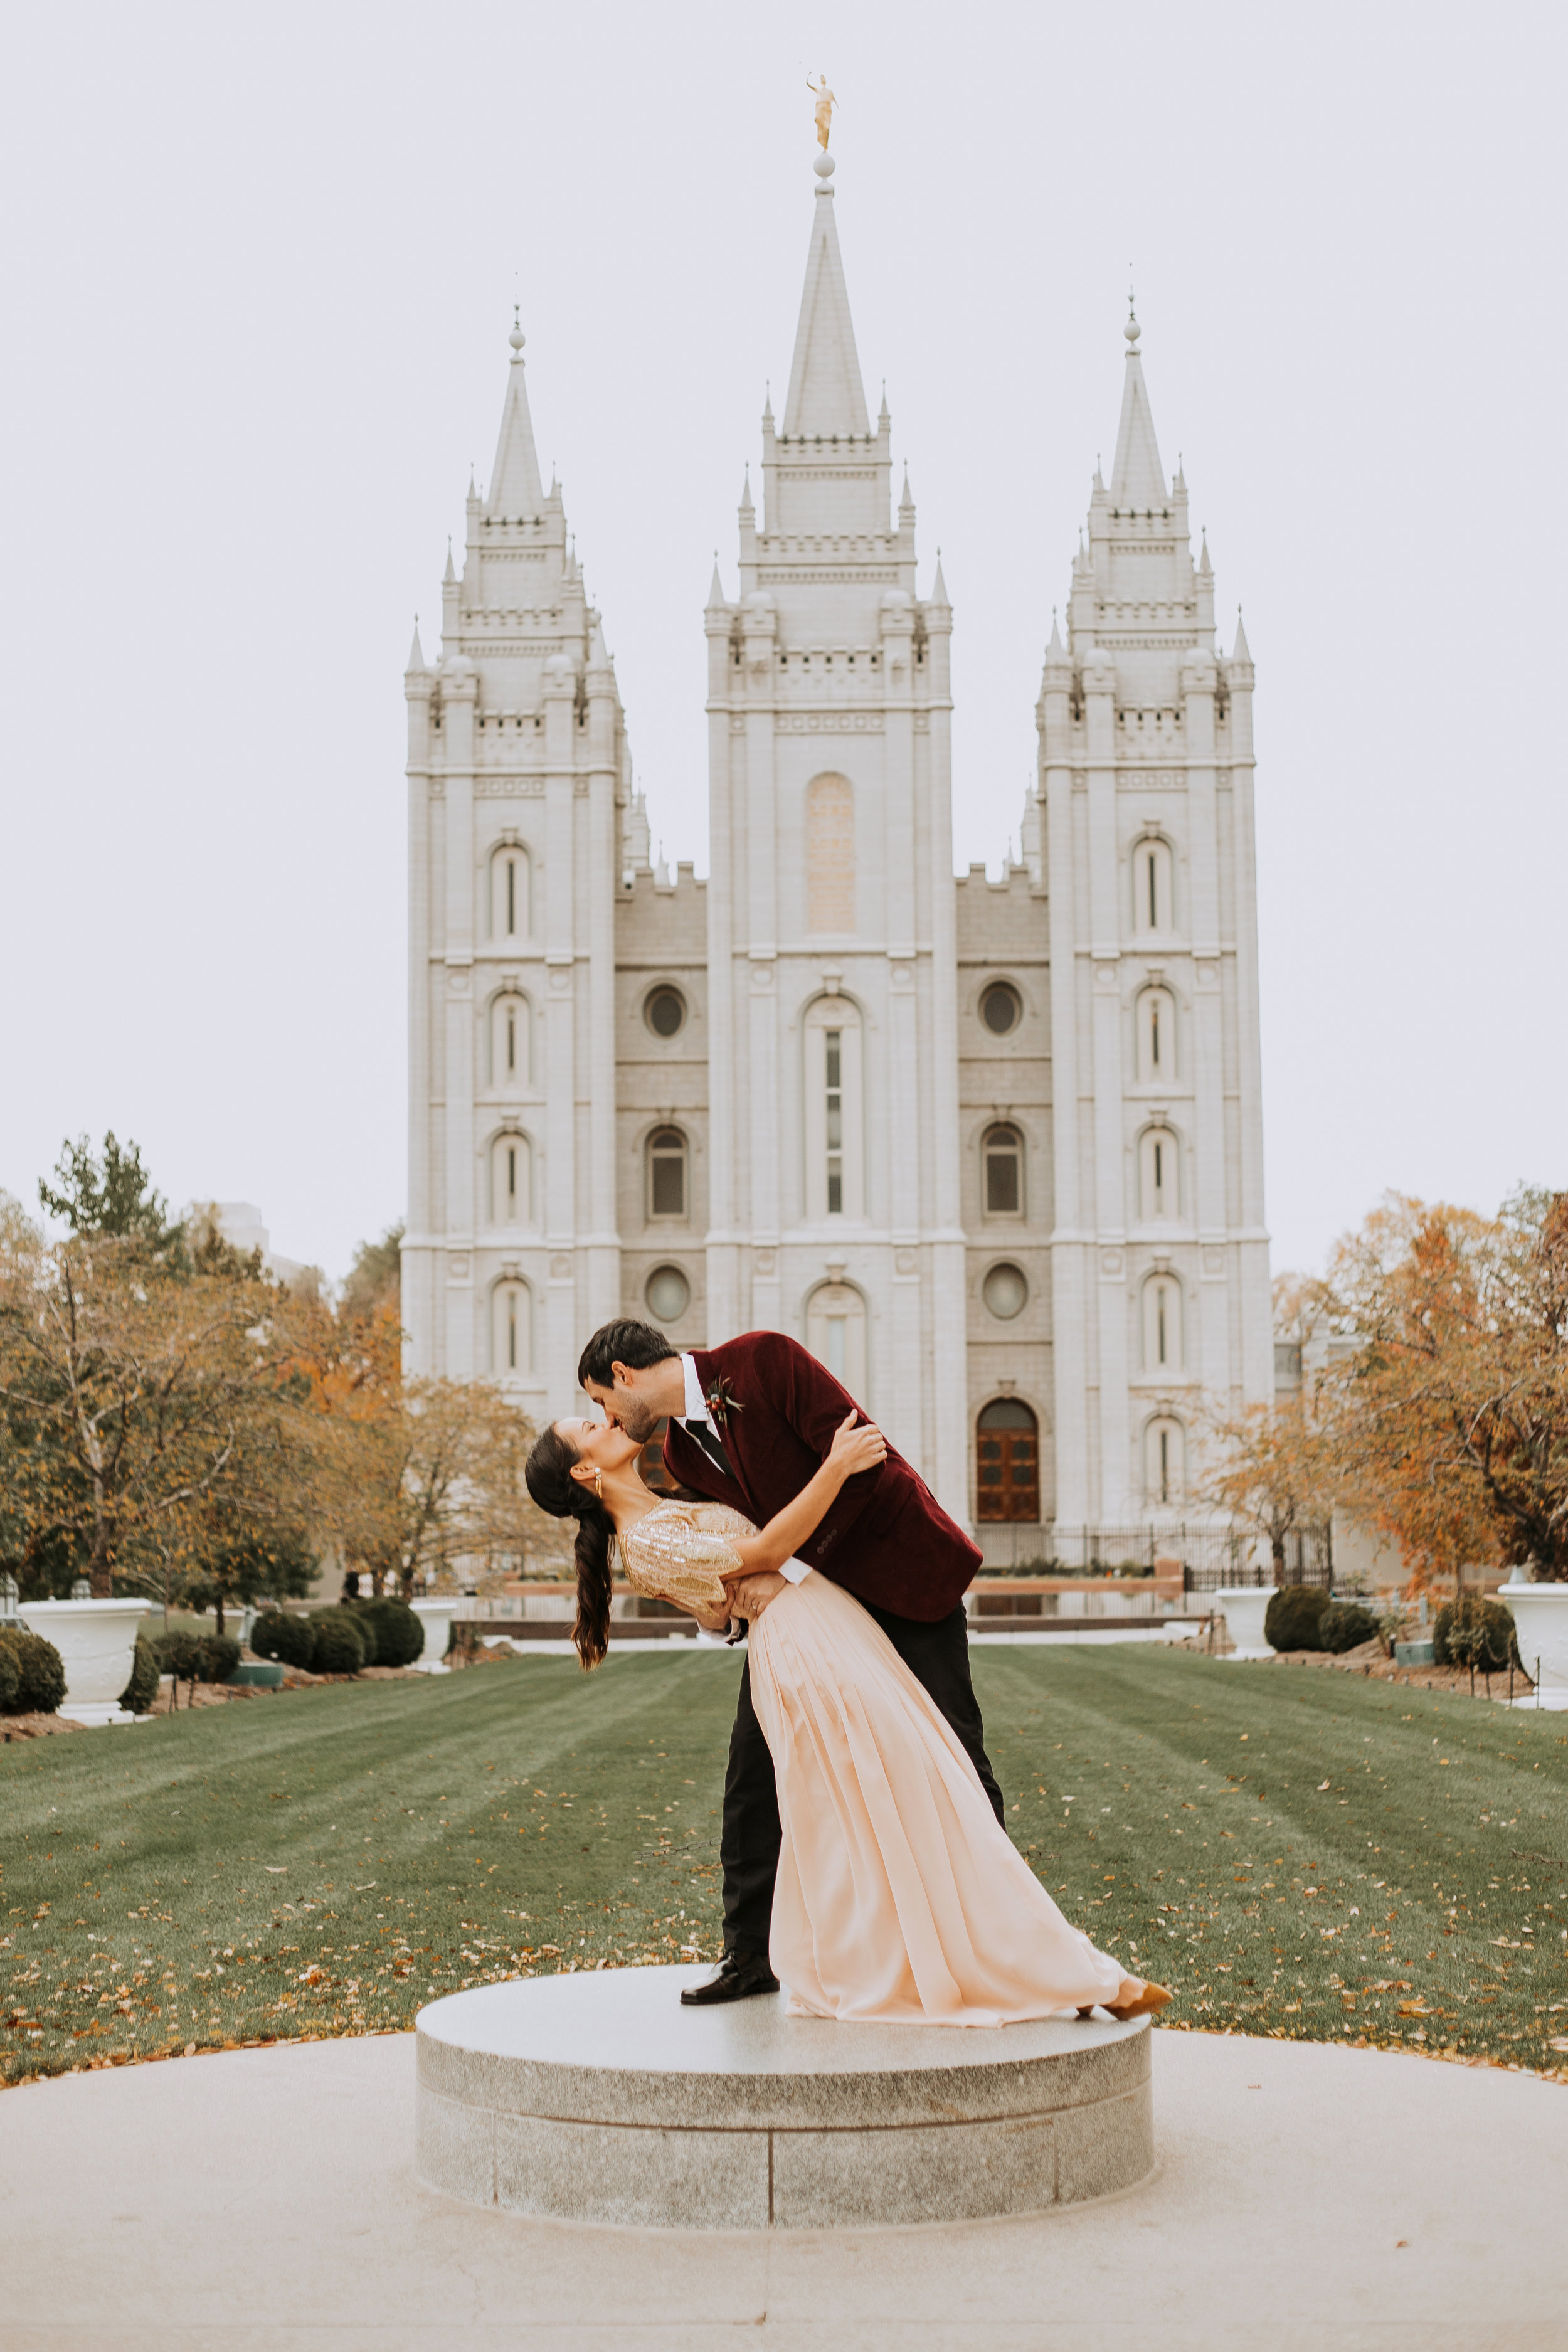 Halloween Wedding in Salt Lake City - Salt Lake City Wedding Photographer - Utah Wedding Photography by Natalie Michelle Photo Co.